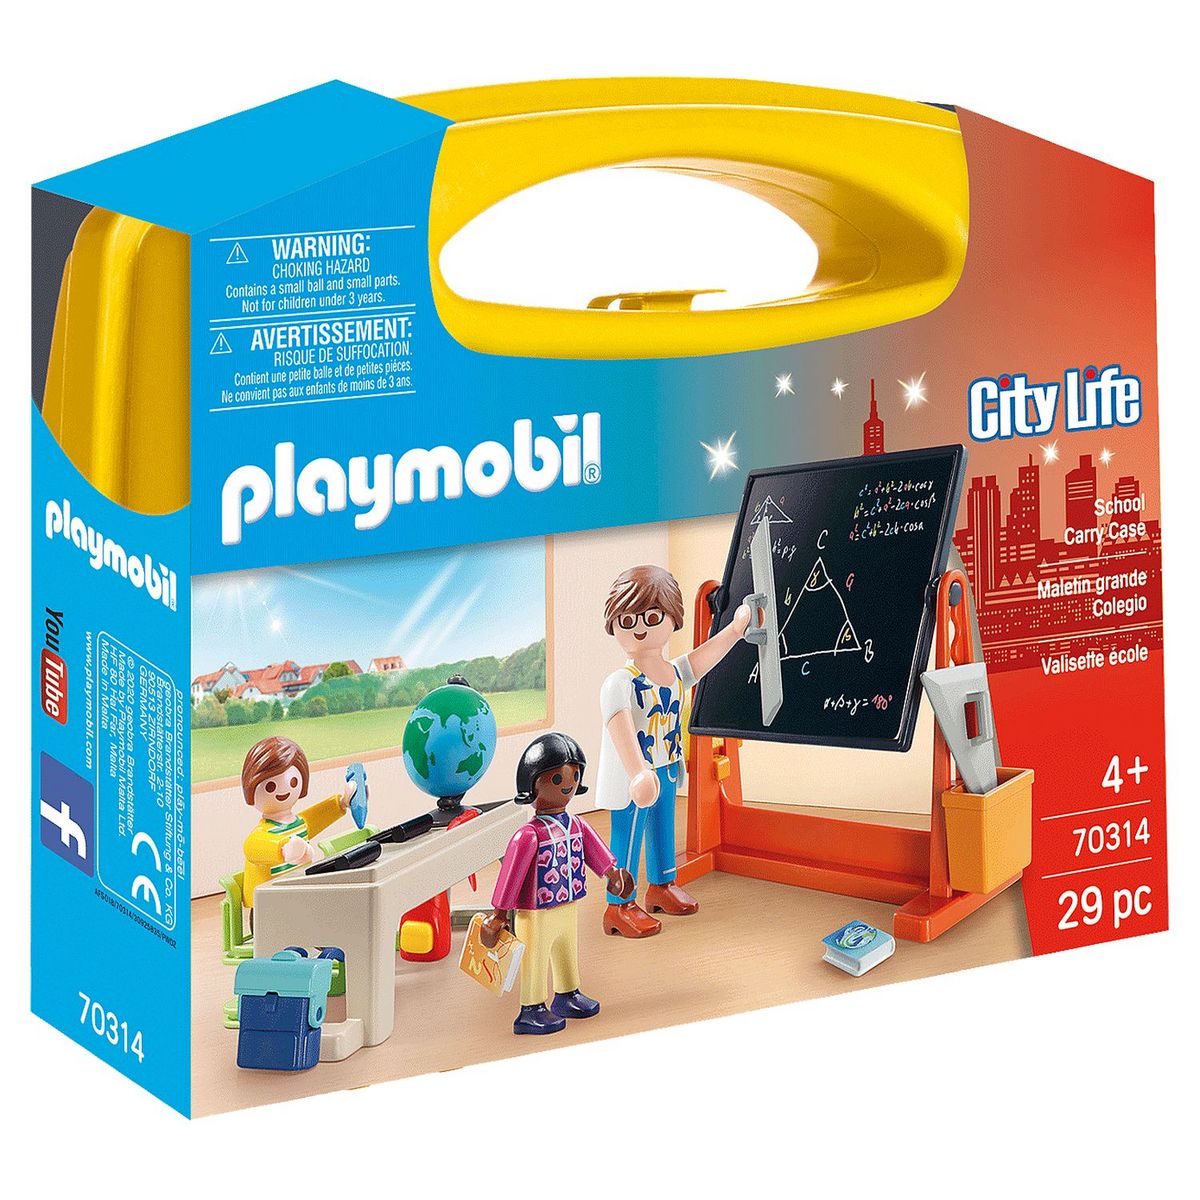 Playmobil City Life Ecole pas cher - Achat neuf et occasion